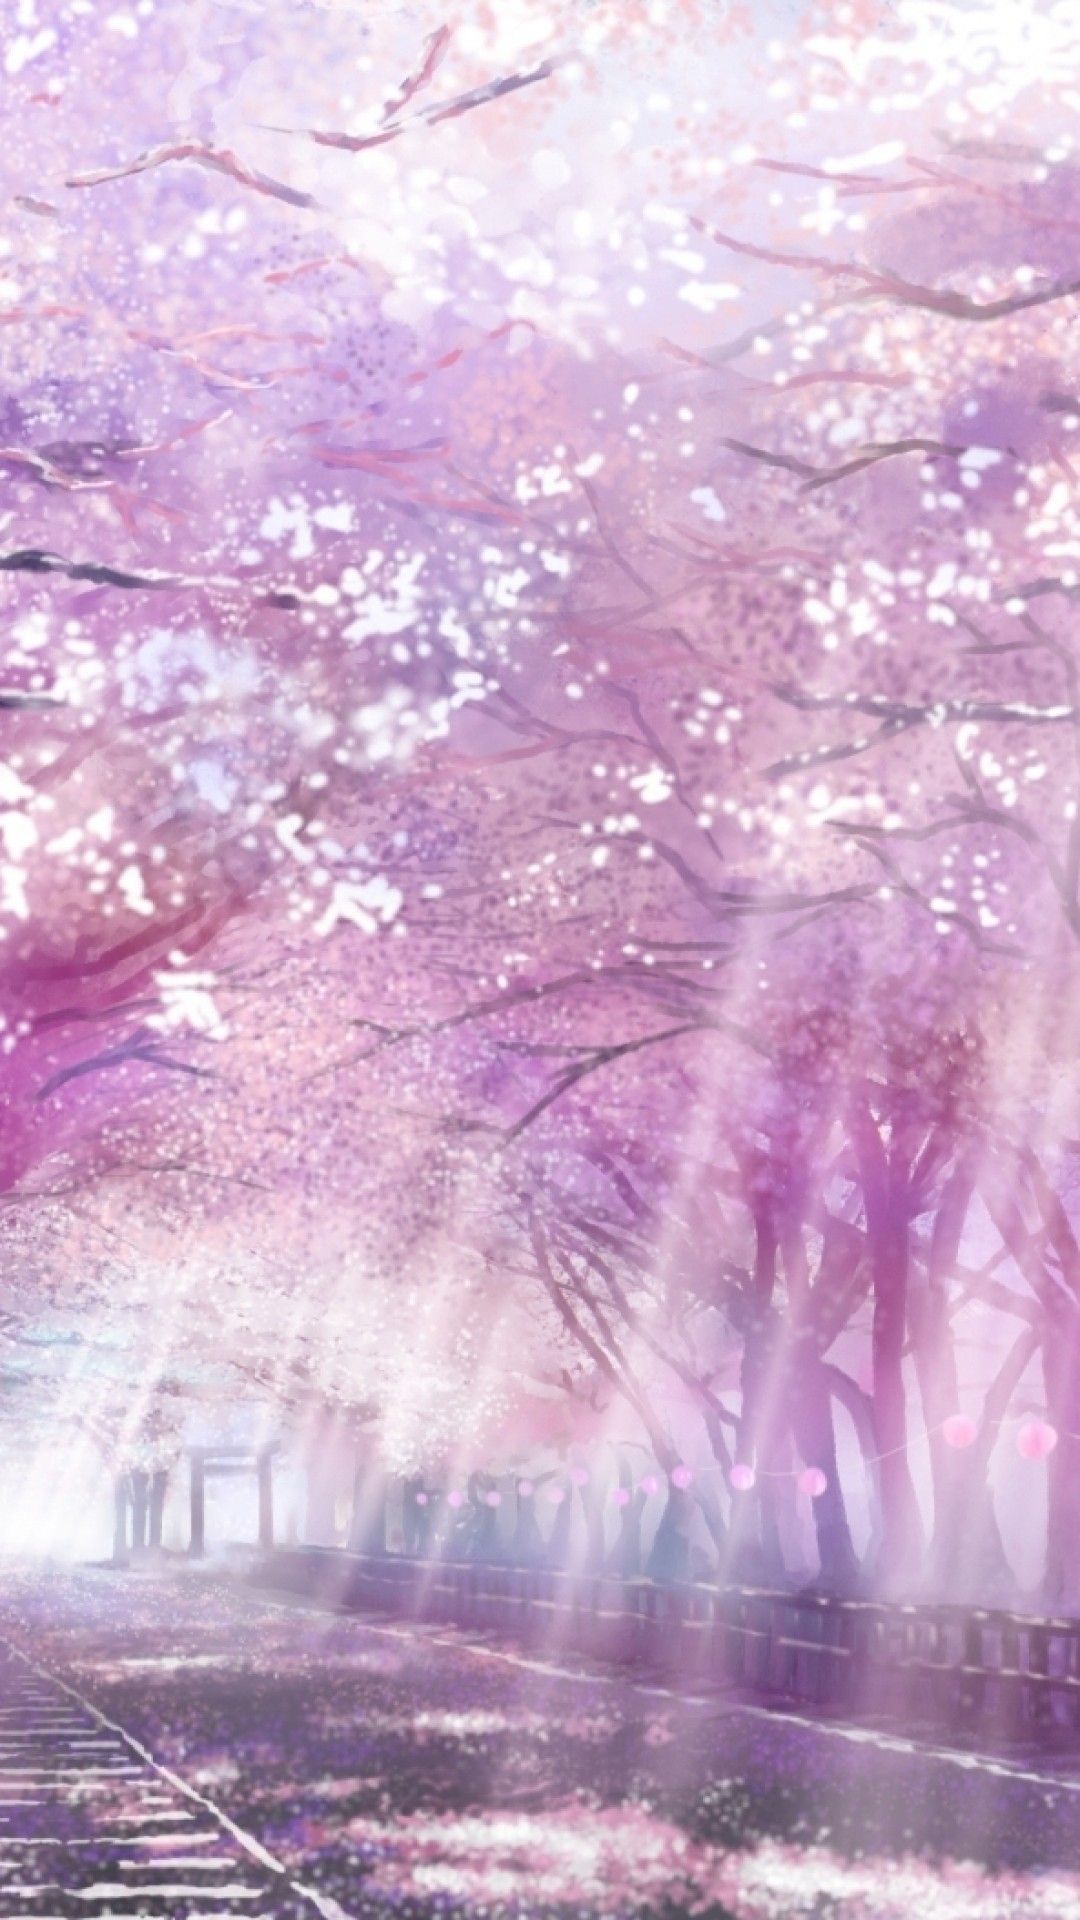 Anime key visual of a girl walking and looking back below a sakura tree,  trending on artstation, Kyoto animation, digital art : r/dalle2